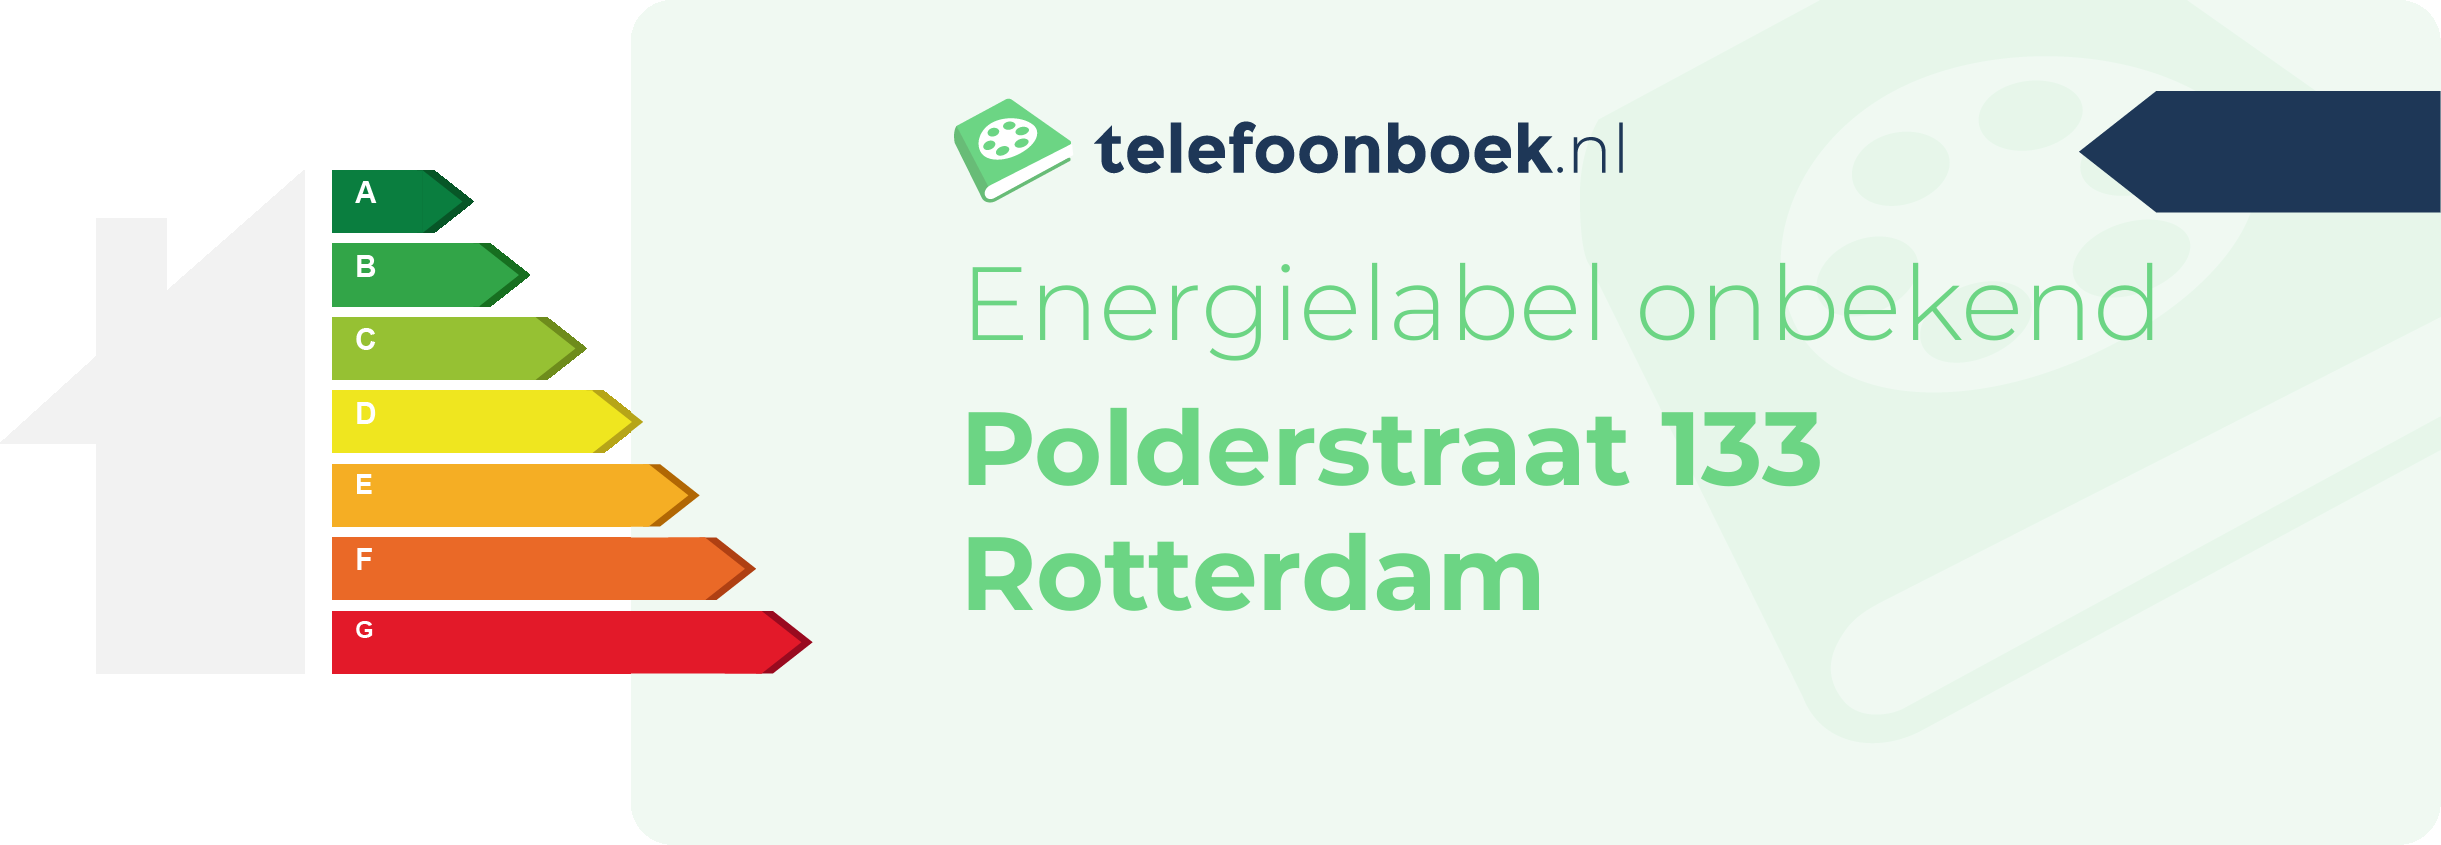 Energielabel Polderstraat 133 Rotterdam